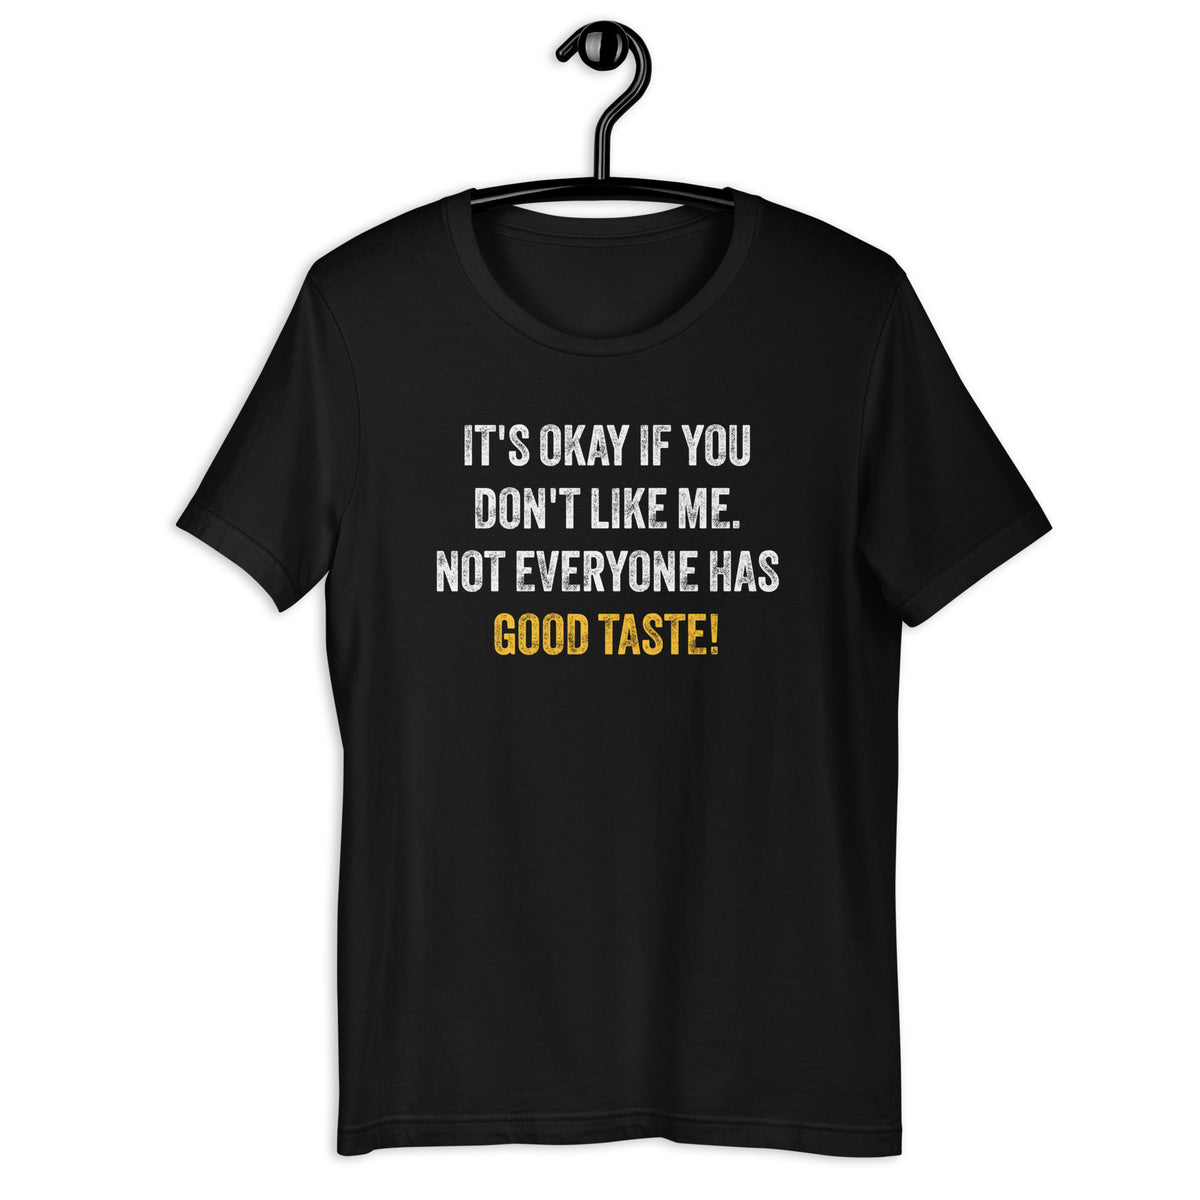 It's okay if you don't like me. Not everyone has good taste! T-shirt - SHOPNOO